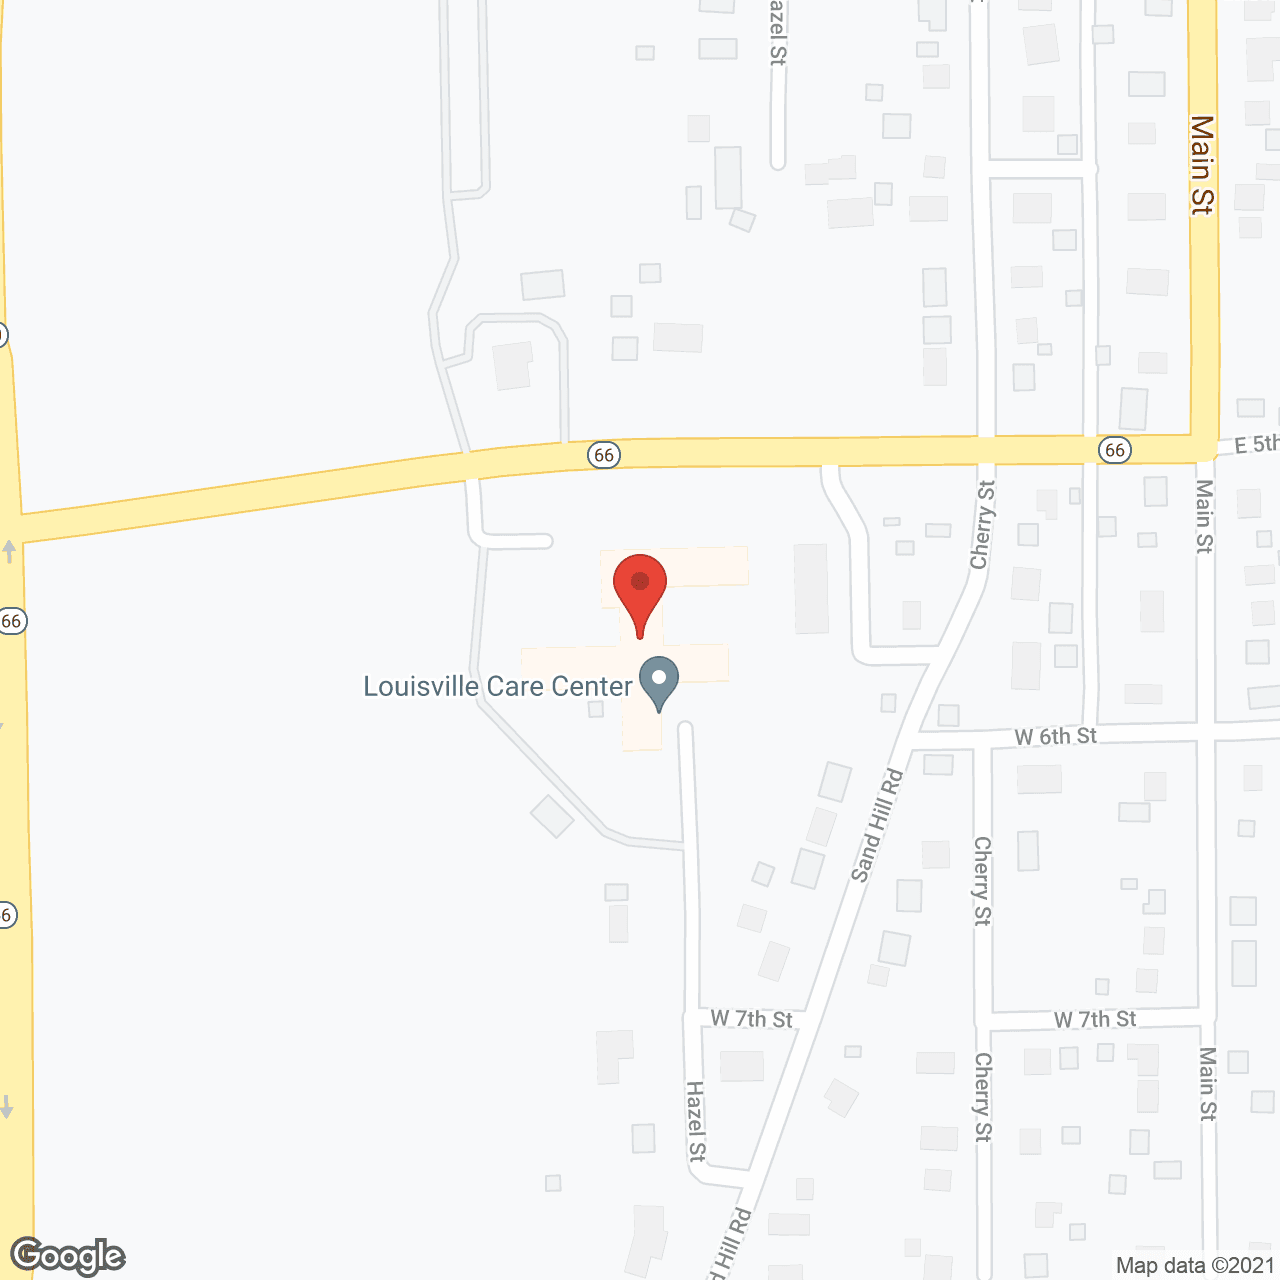 Louisville Care Ctr in google map